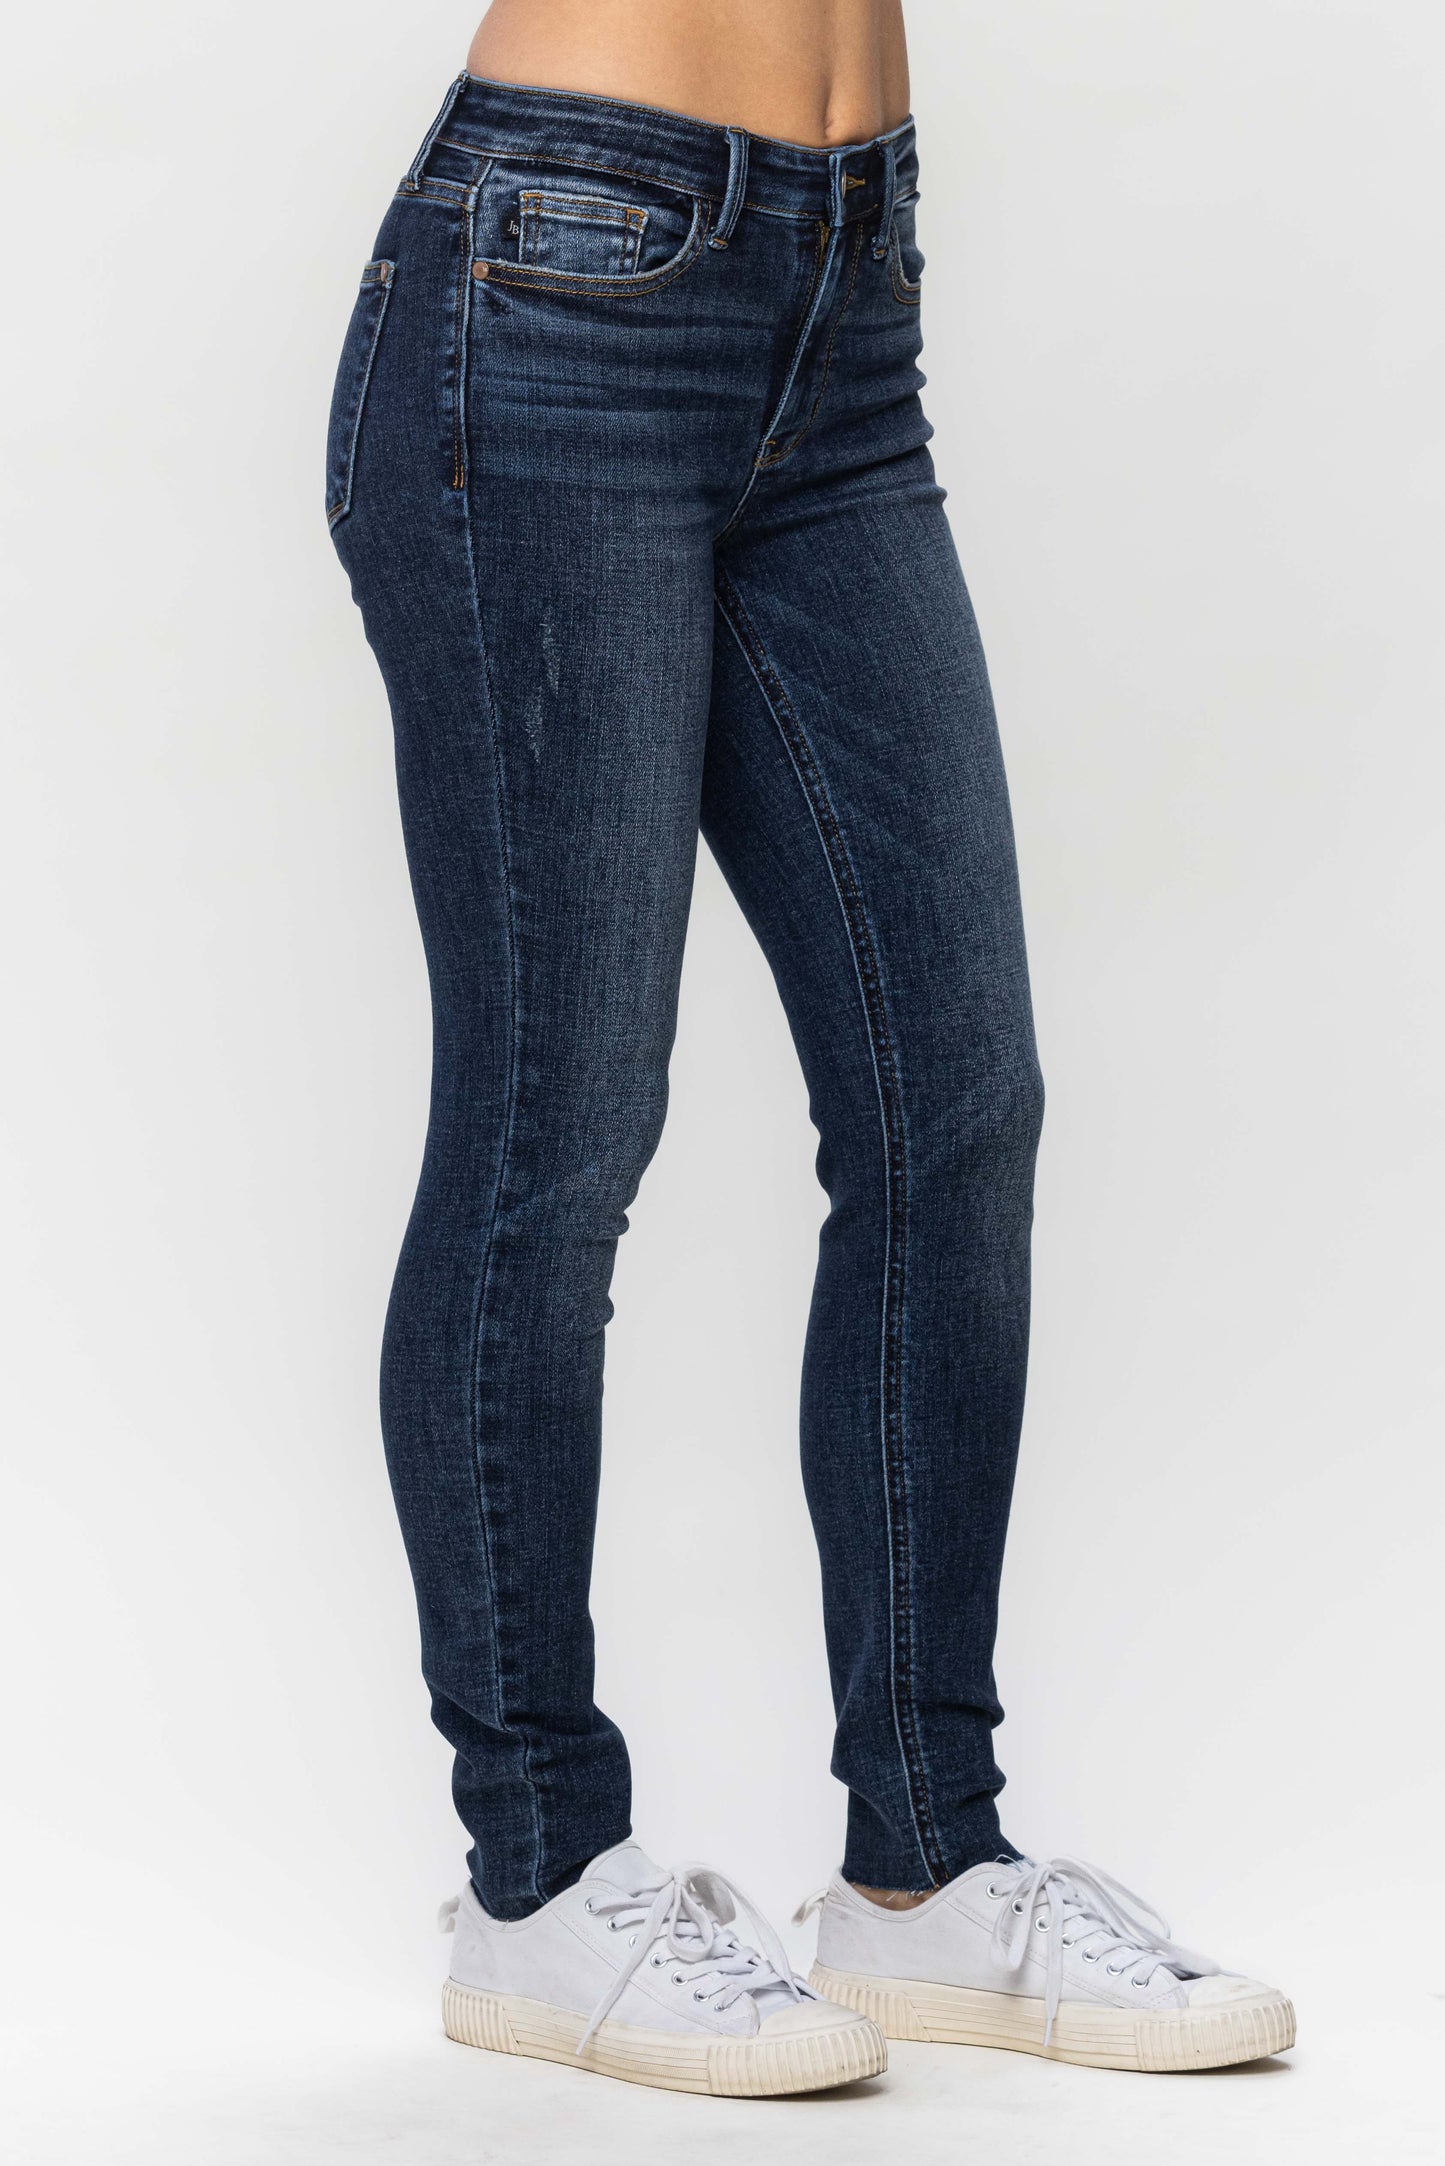 Judy Blue Vintage Raw Hem Skinny Jeans